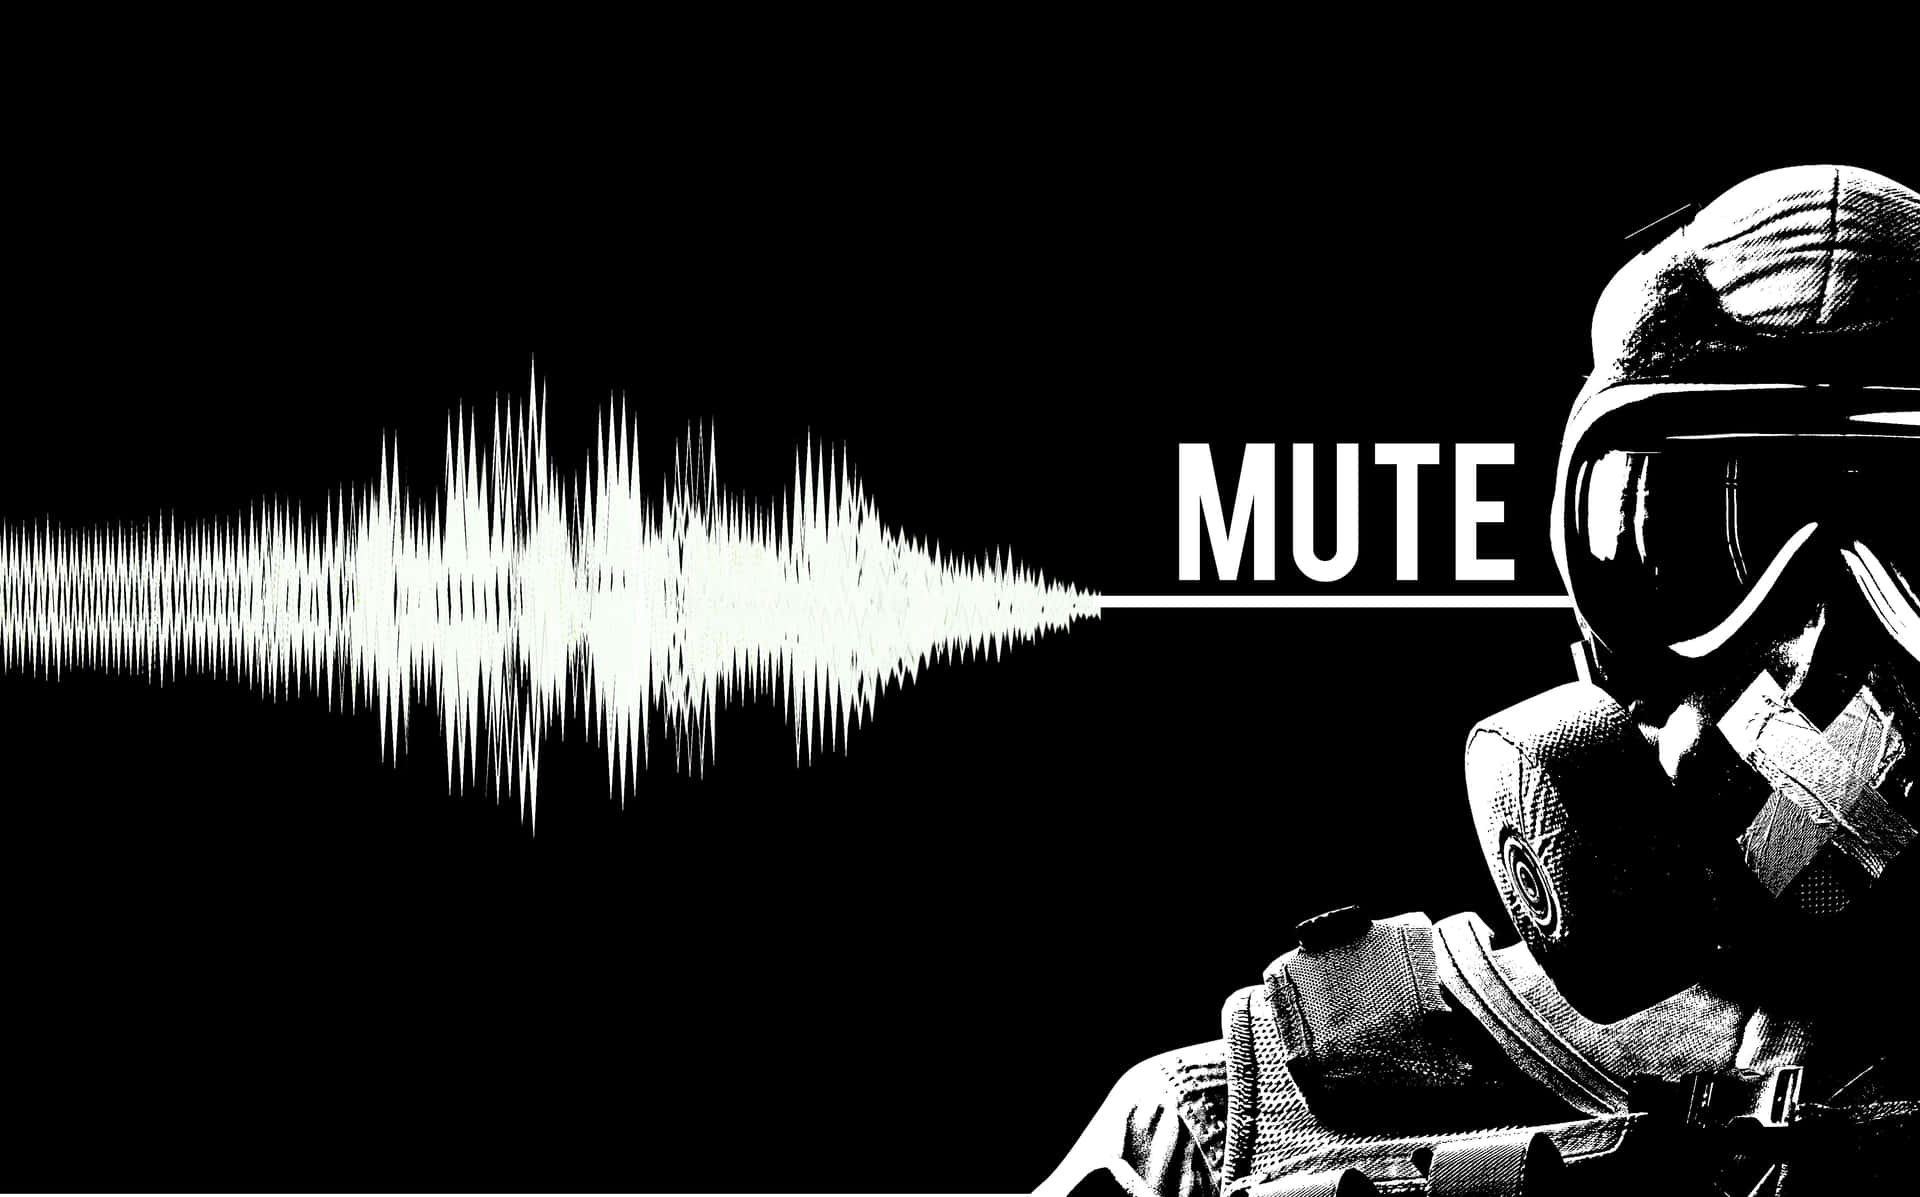 Mute by Cyrax